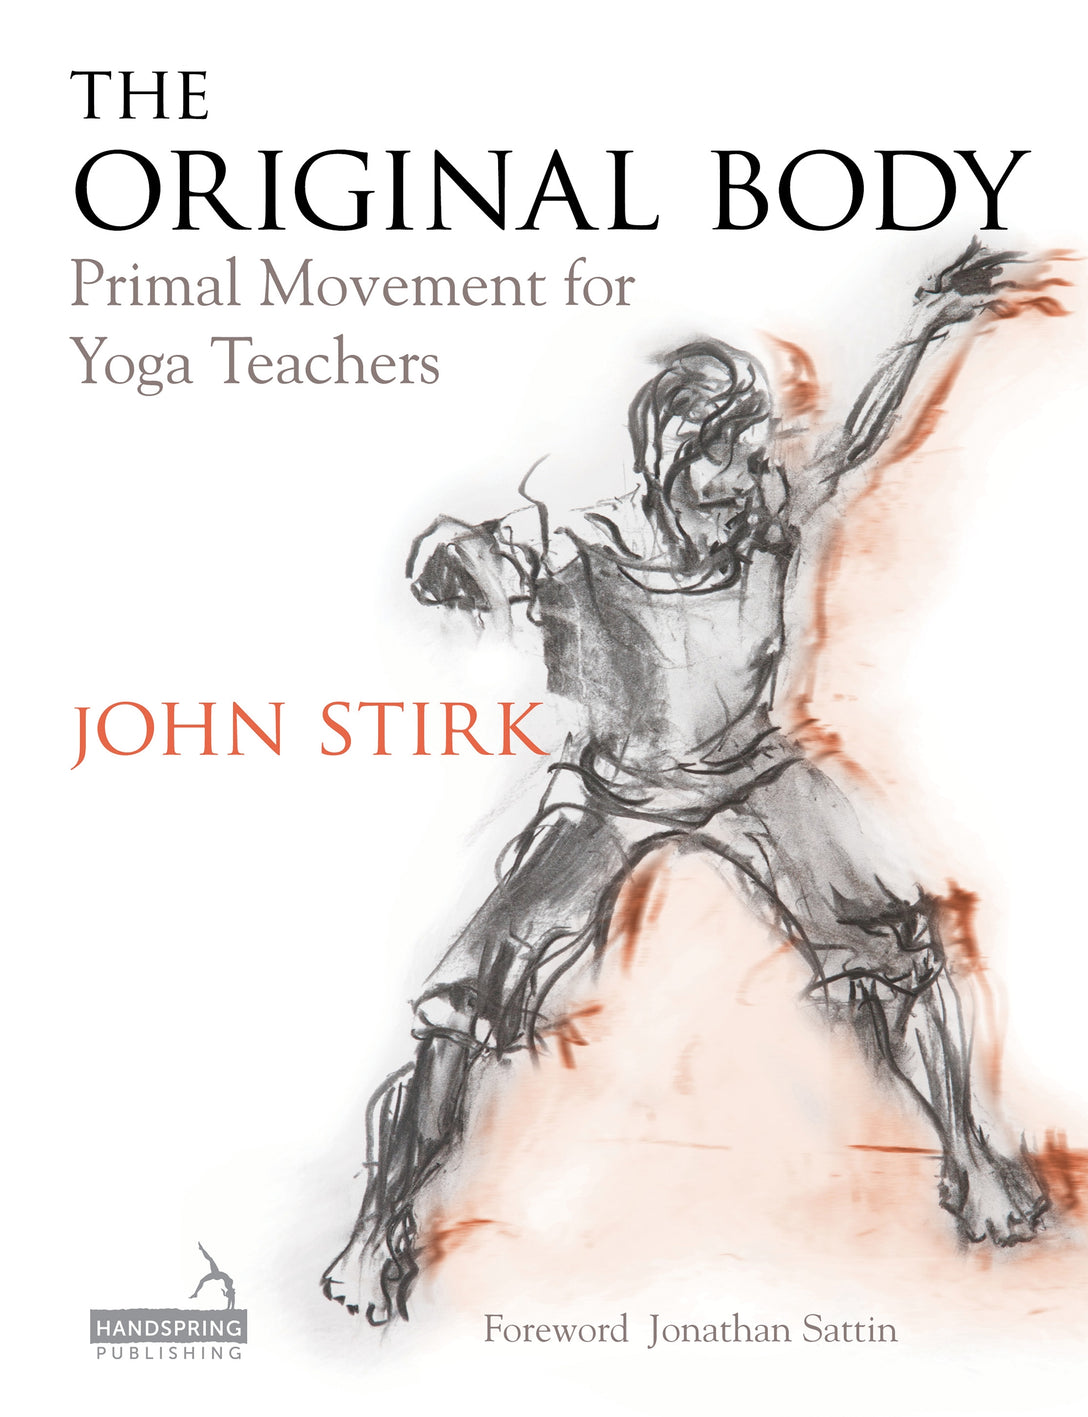 The Original Body by John Stirk